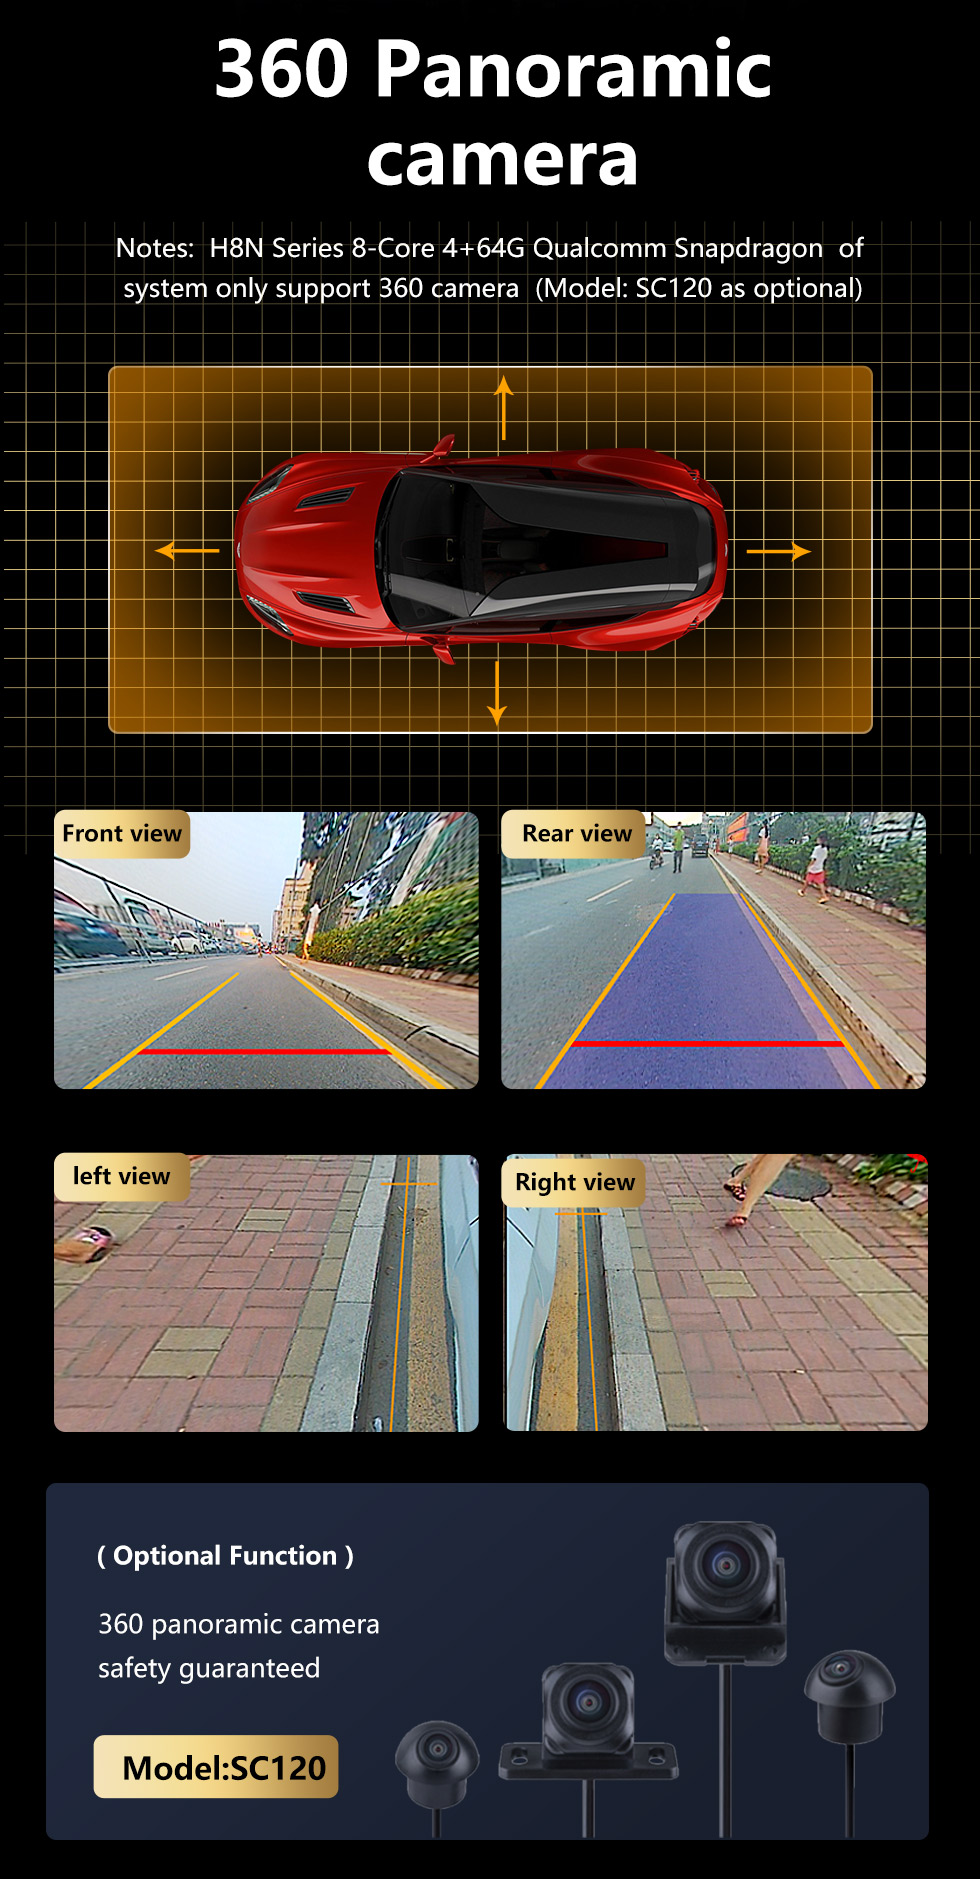 Seicane Android 10.0 10.25 pulgadas para BMW 5 Series F07 GT 2011-2012 CIC Radio HD Pantalla táctil Sistema de navegación GPS con soporte Bluetooth Carplay DVR